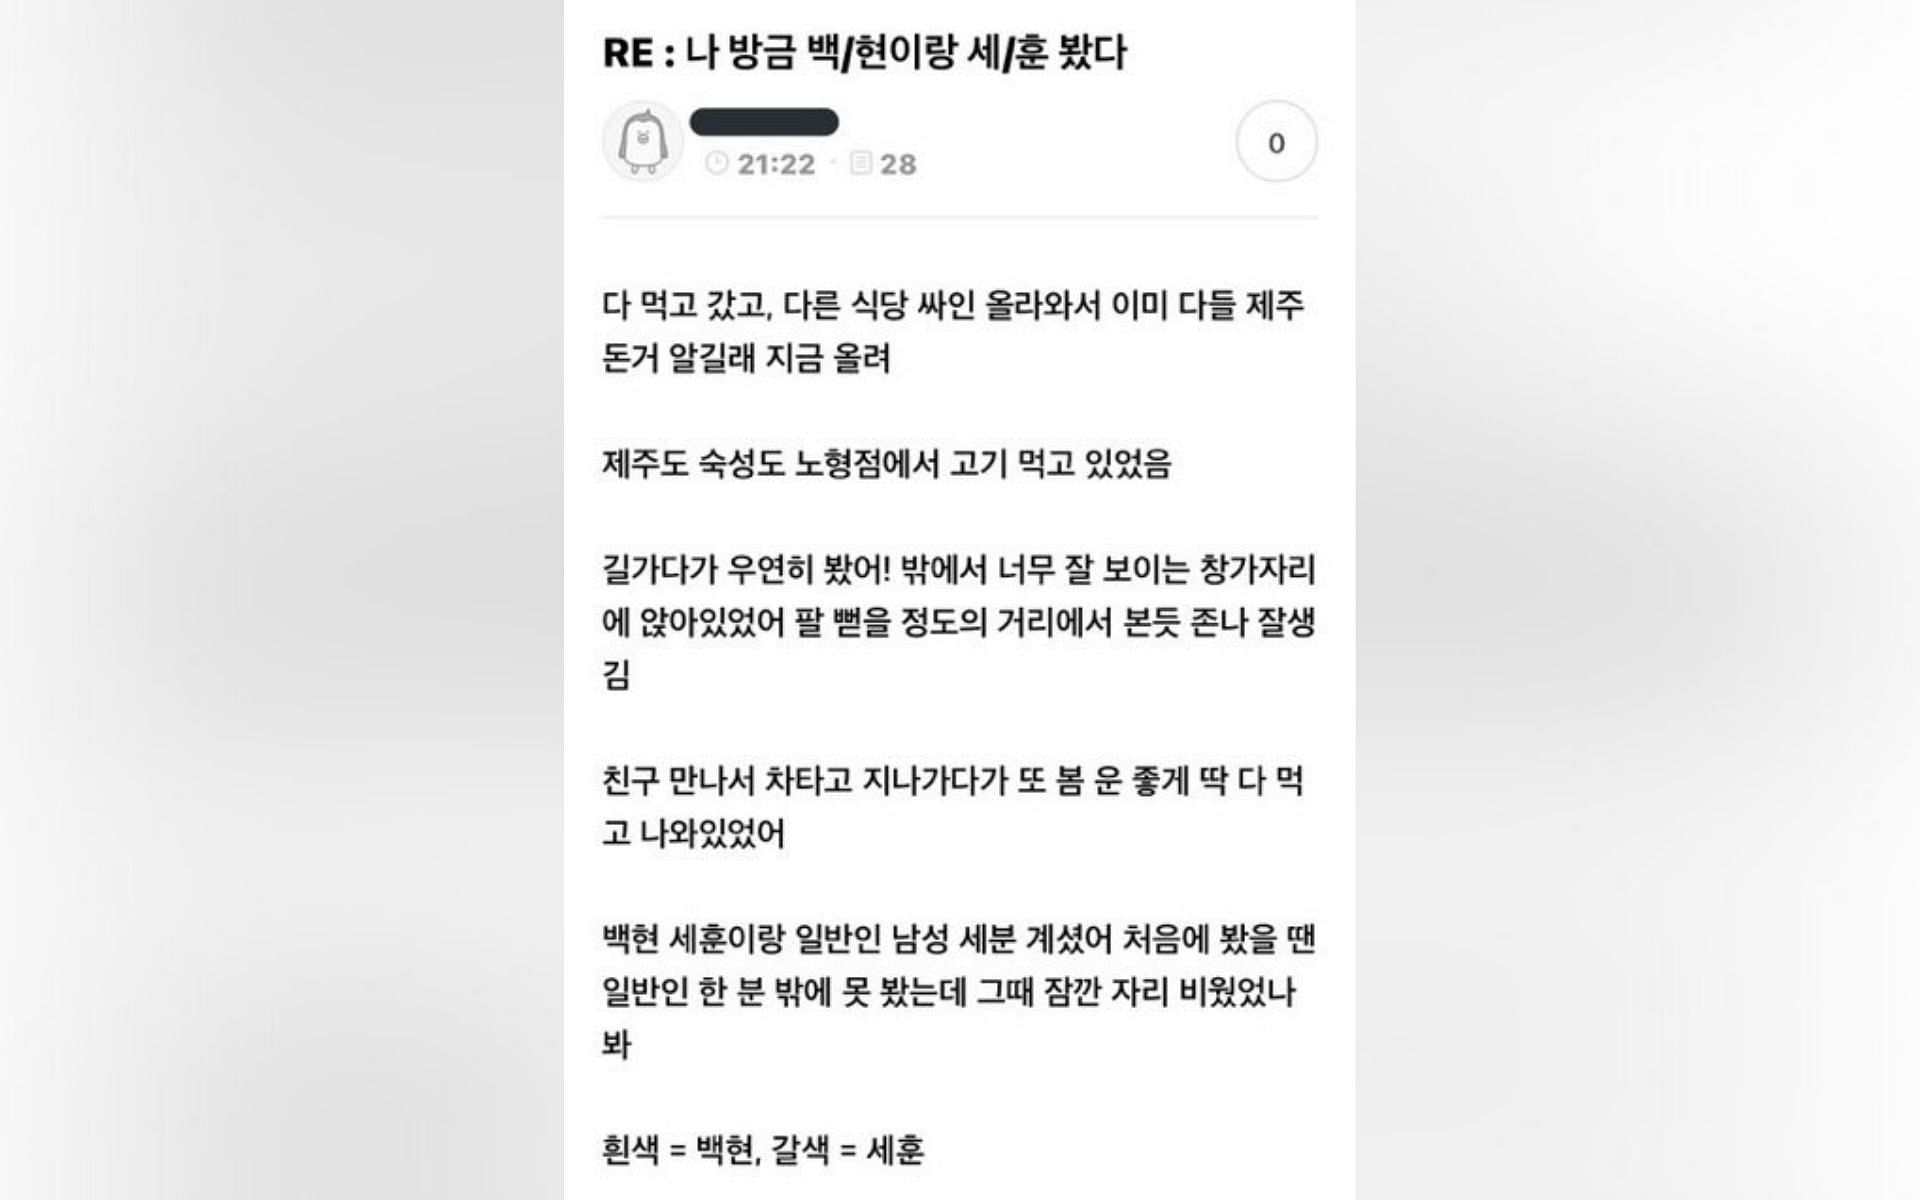 Blog post of the K-netizen (Image via allkpop)